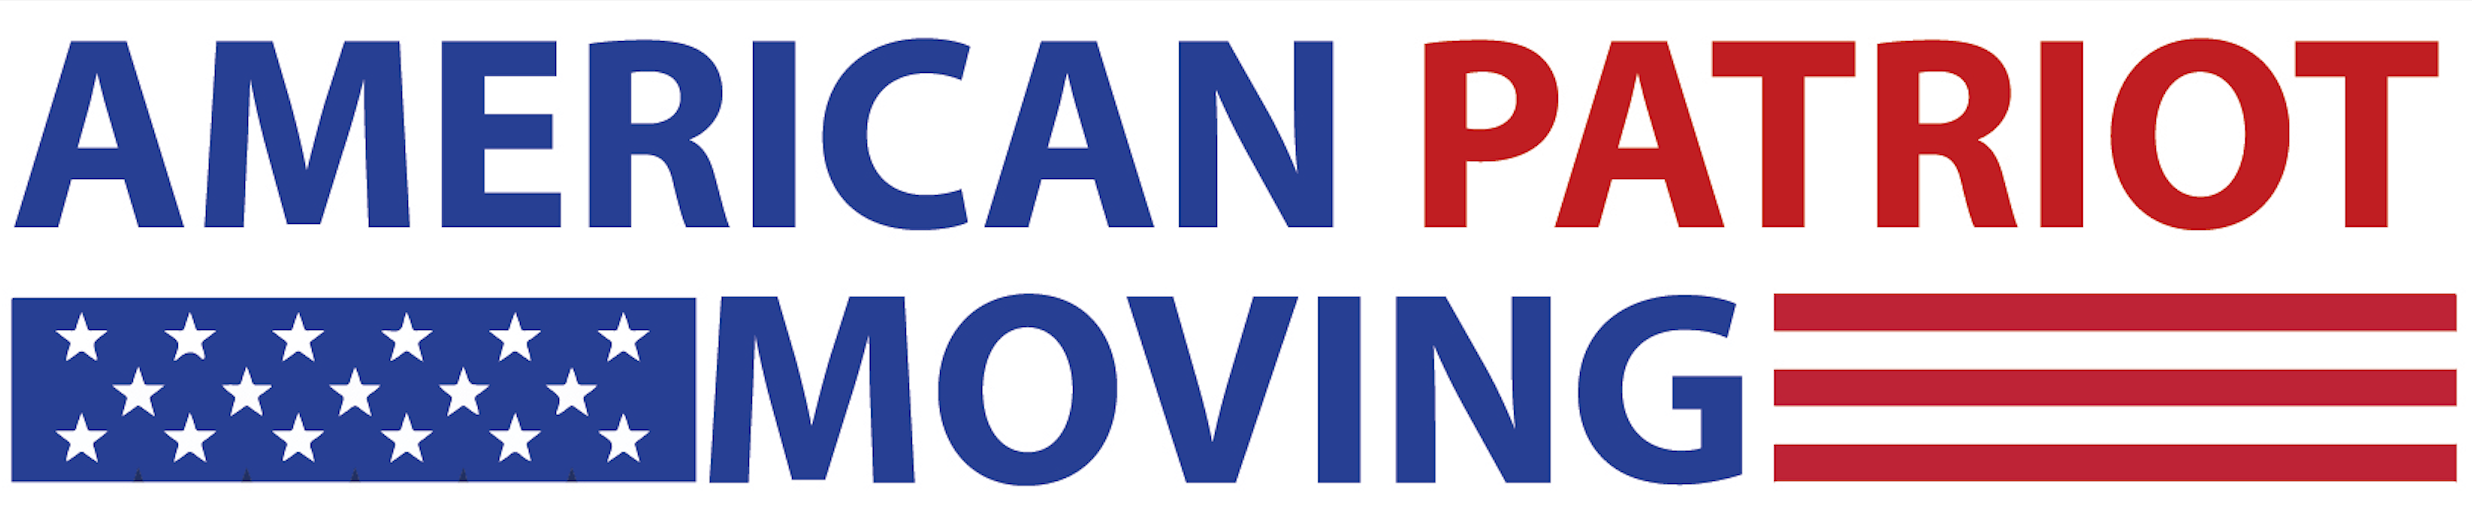 American Patriot Moving